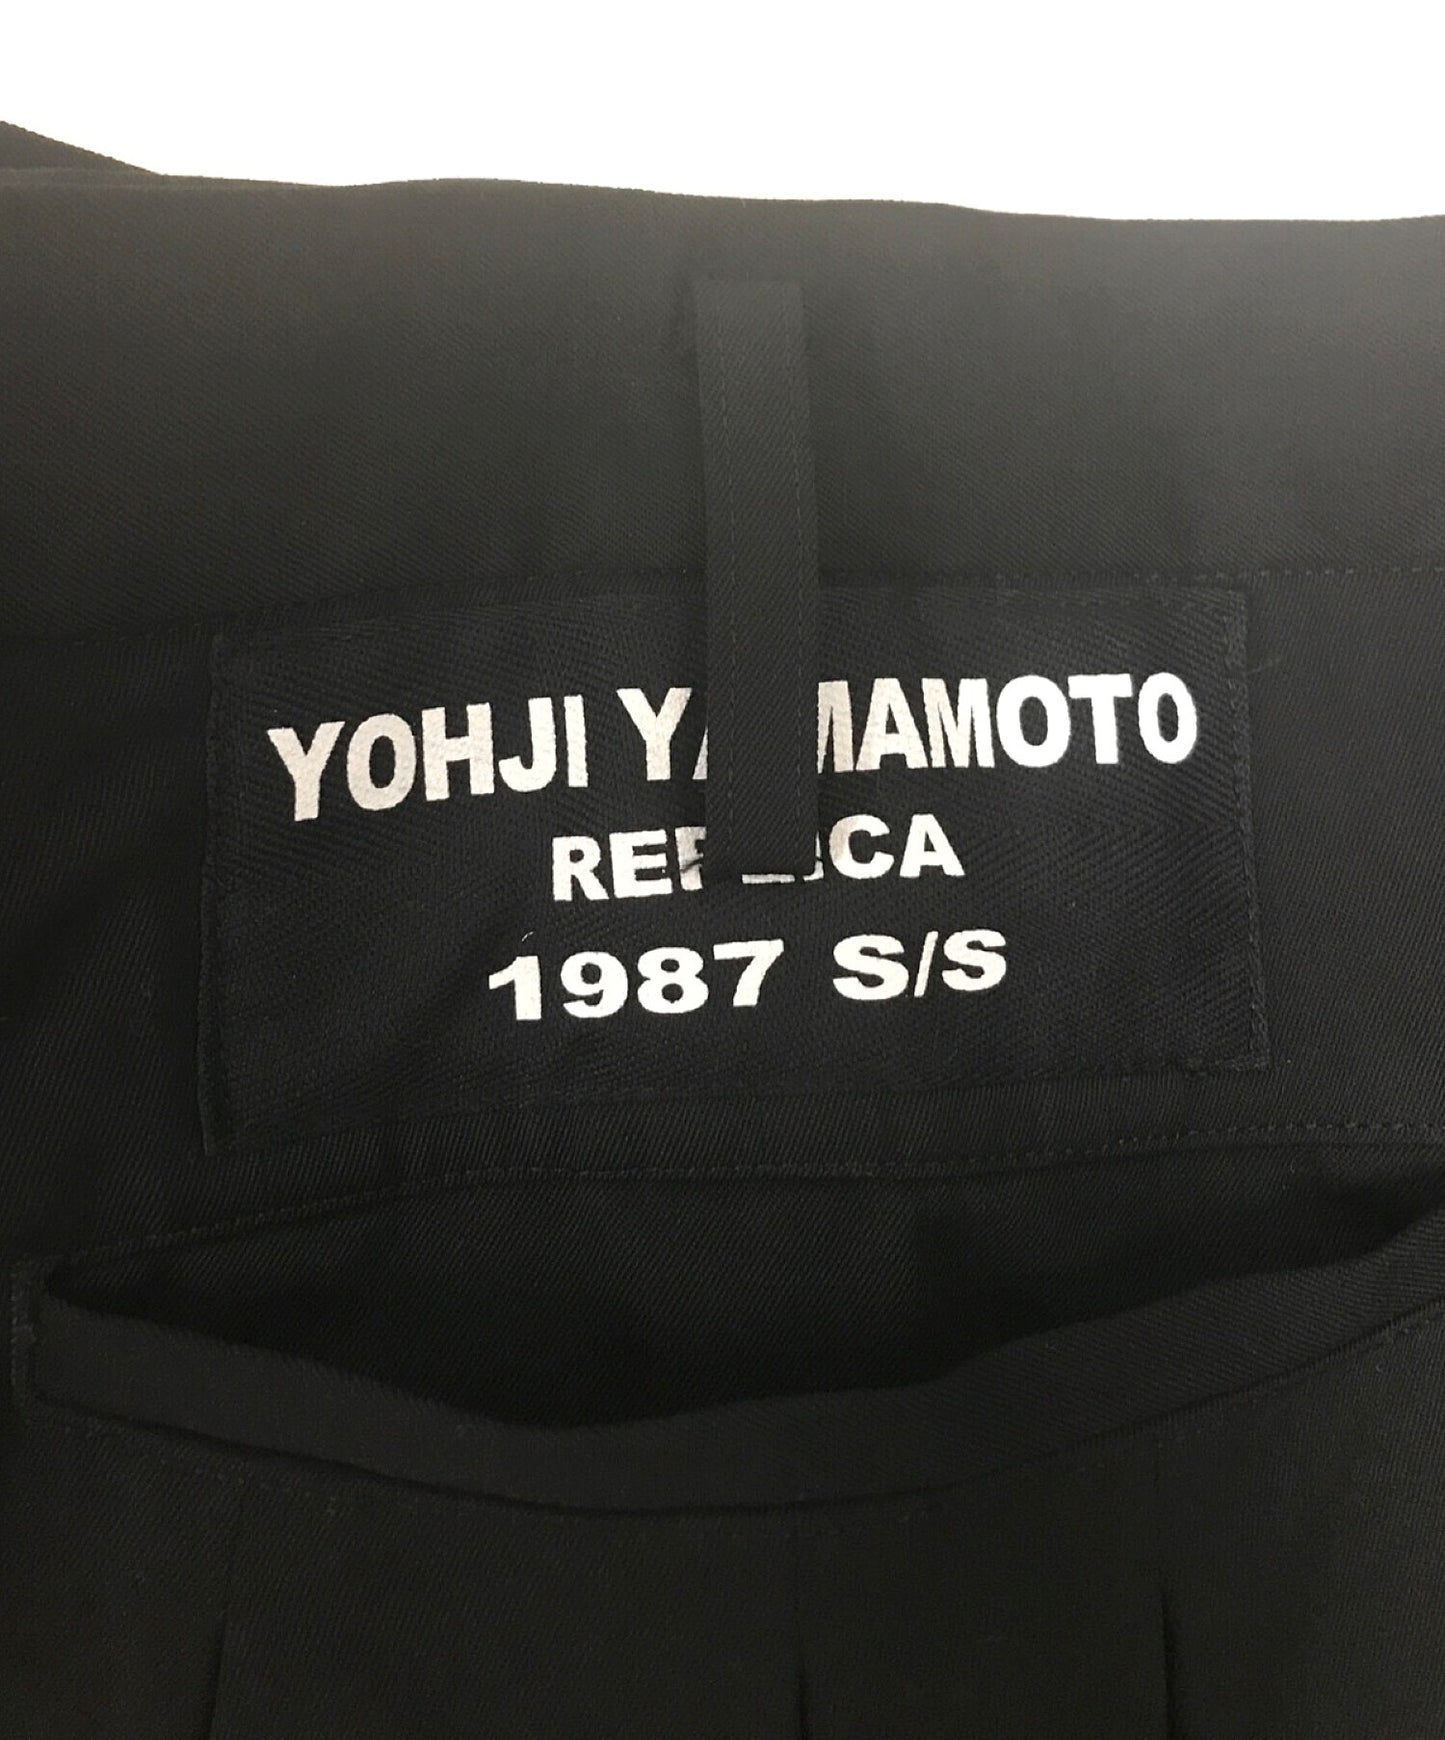 Yohji Yamamoto Pour Homme Cutout tuck tuck宽裤子HH-P33-110